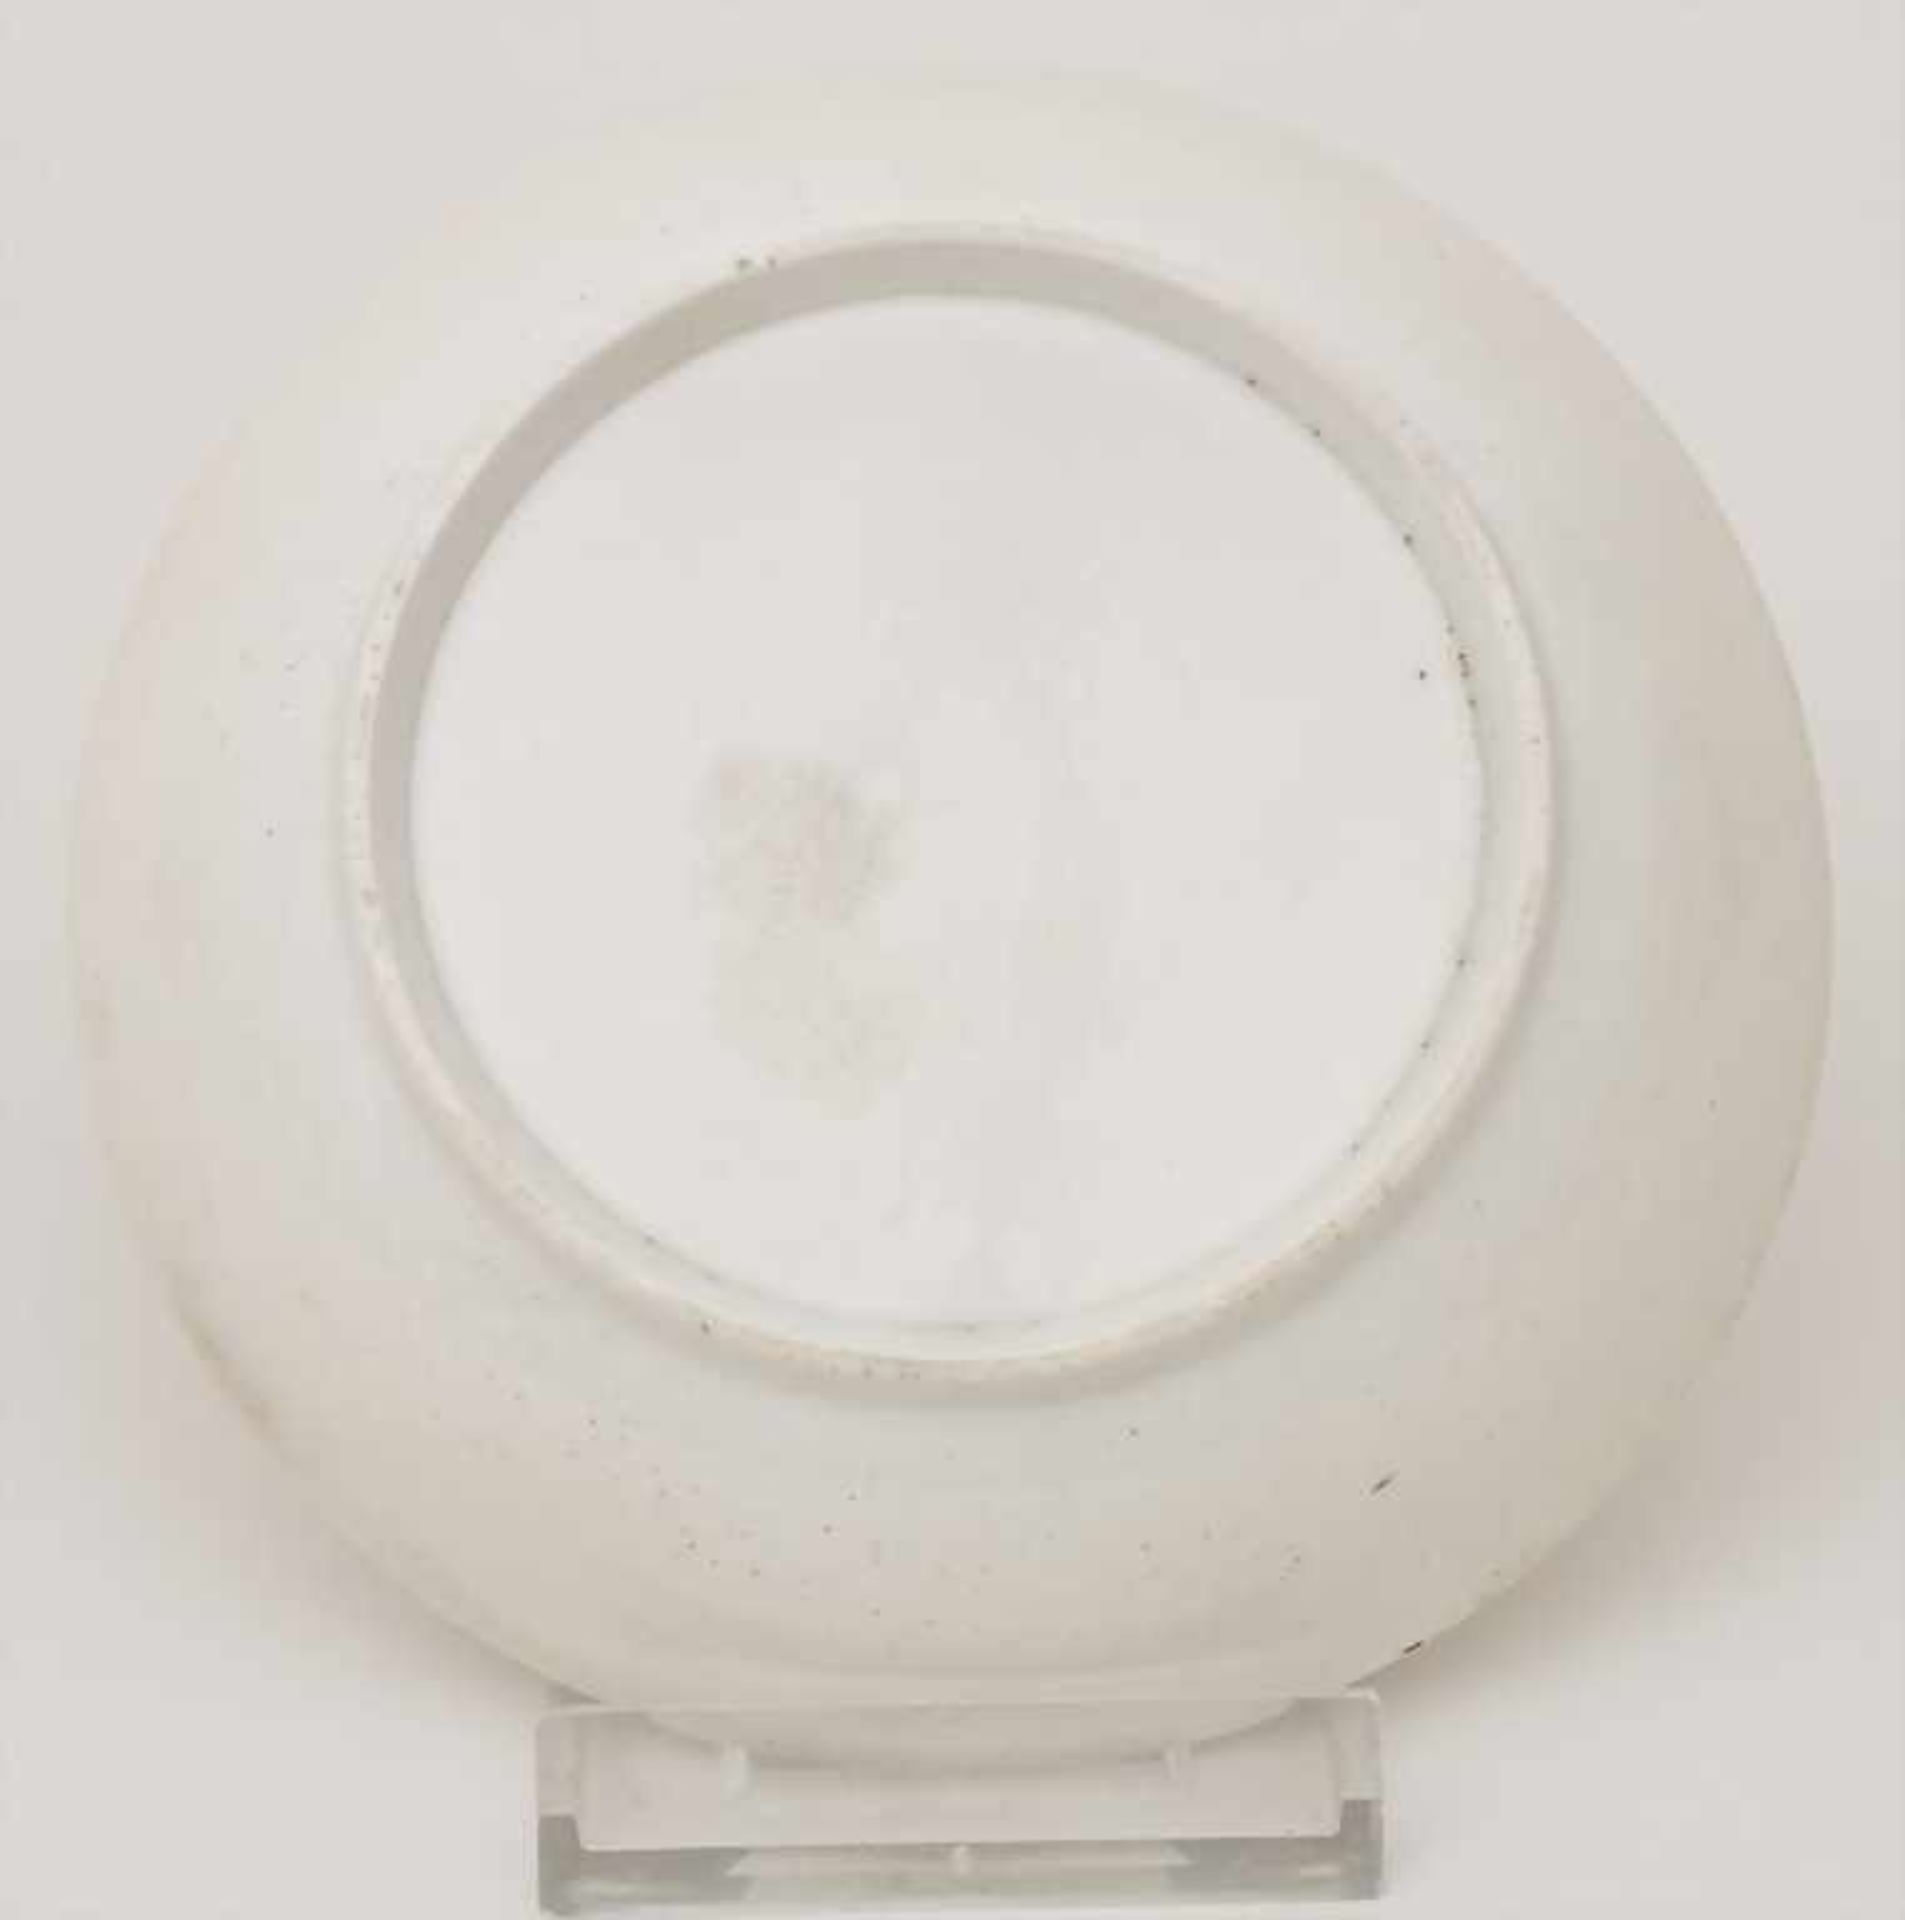 Creamware Unterschale / A creamware / pearlware dish / faience fine, wohl England, um 1800 - Image 3 of 3